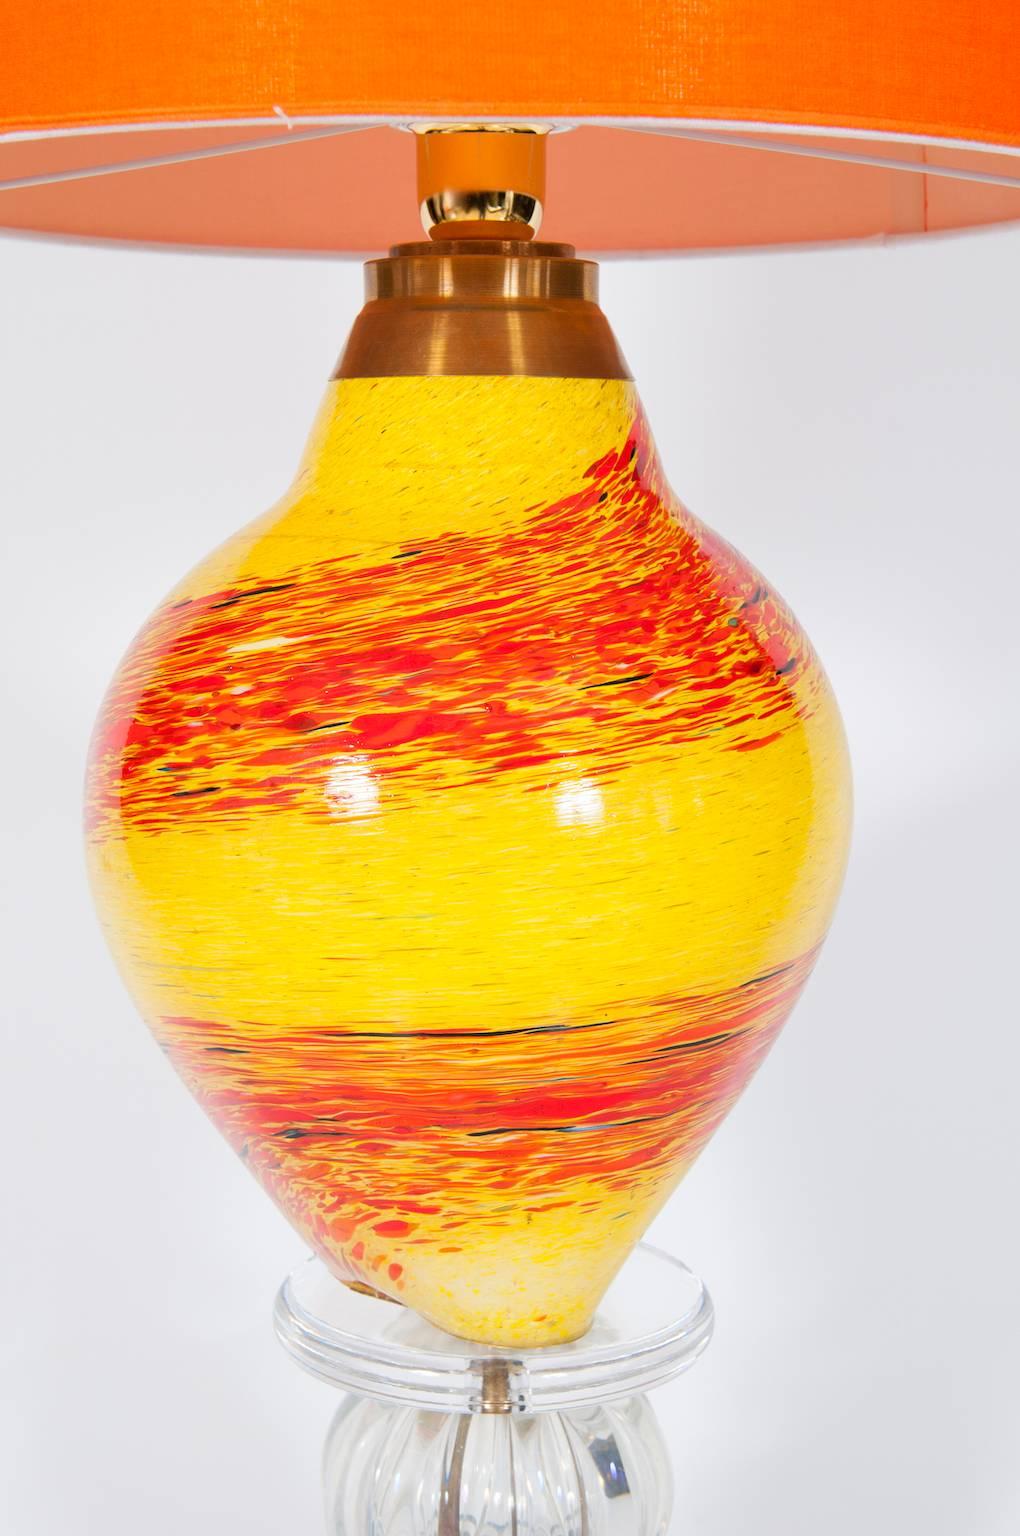 Art Glass Italian Venetian Murano Glass Table Lamp in Multicolor yellow orang 1970s For Sale